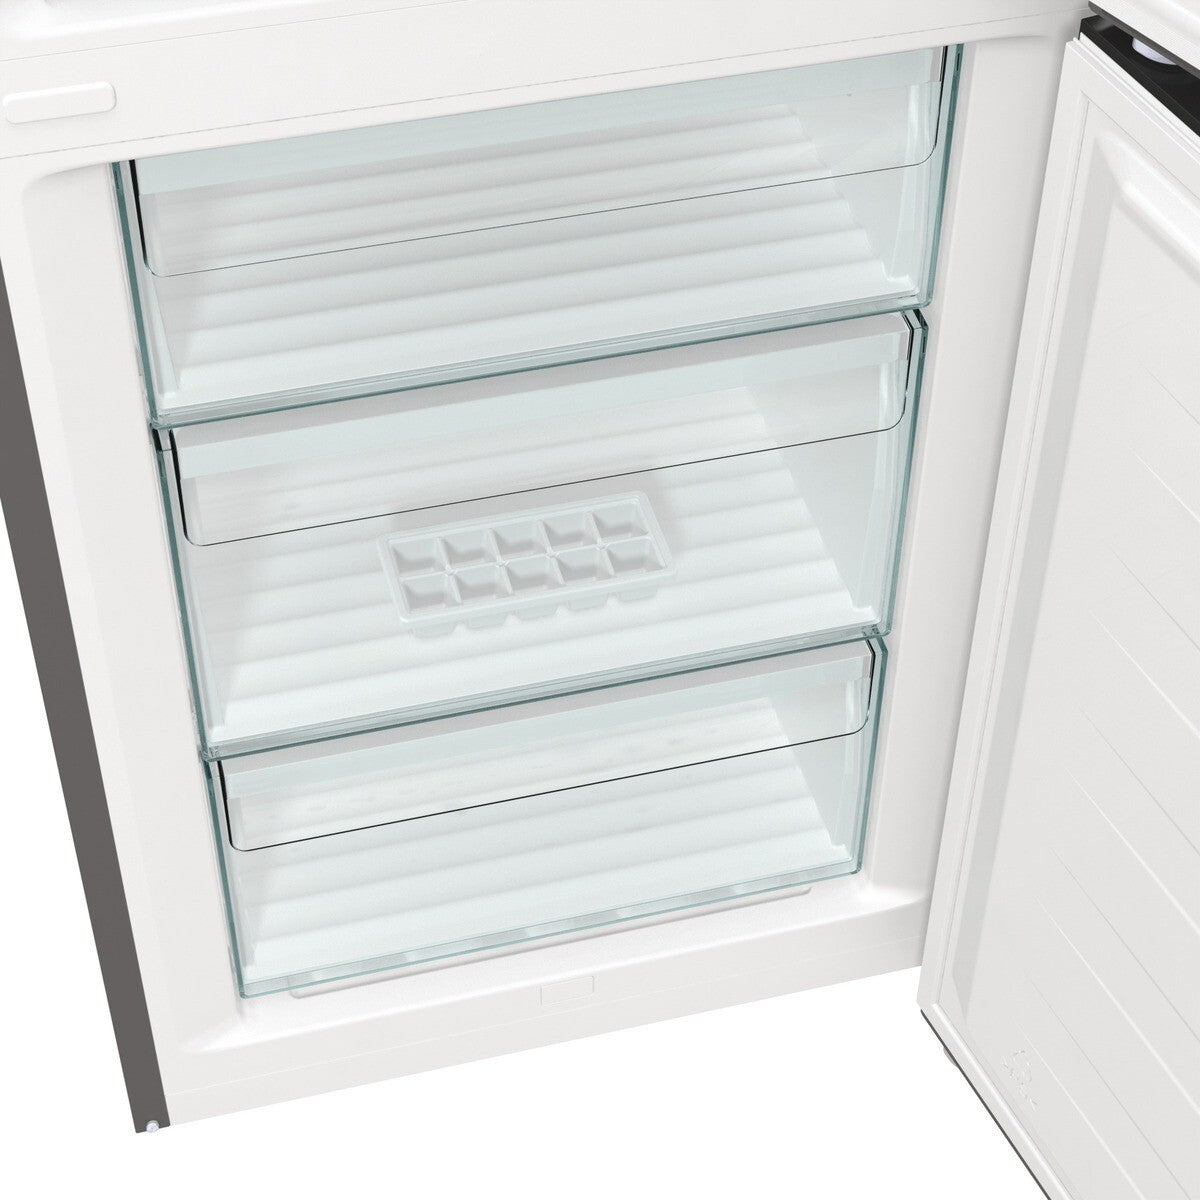 Kombinovaná chladnička s mrazničkou dole Gorenje NRK6202AXL4